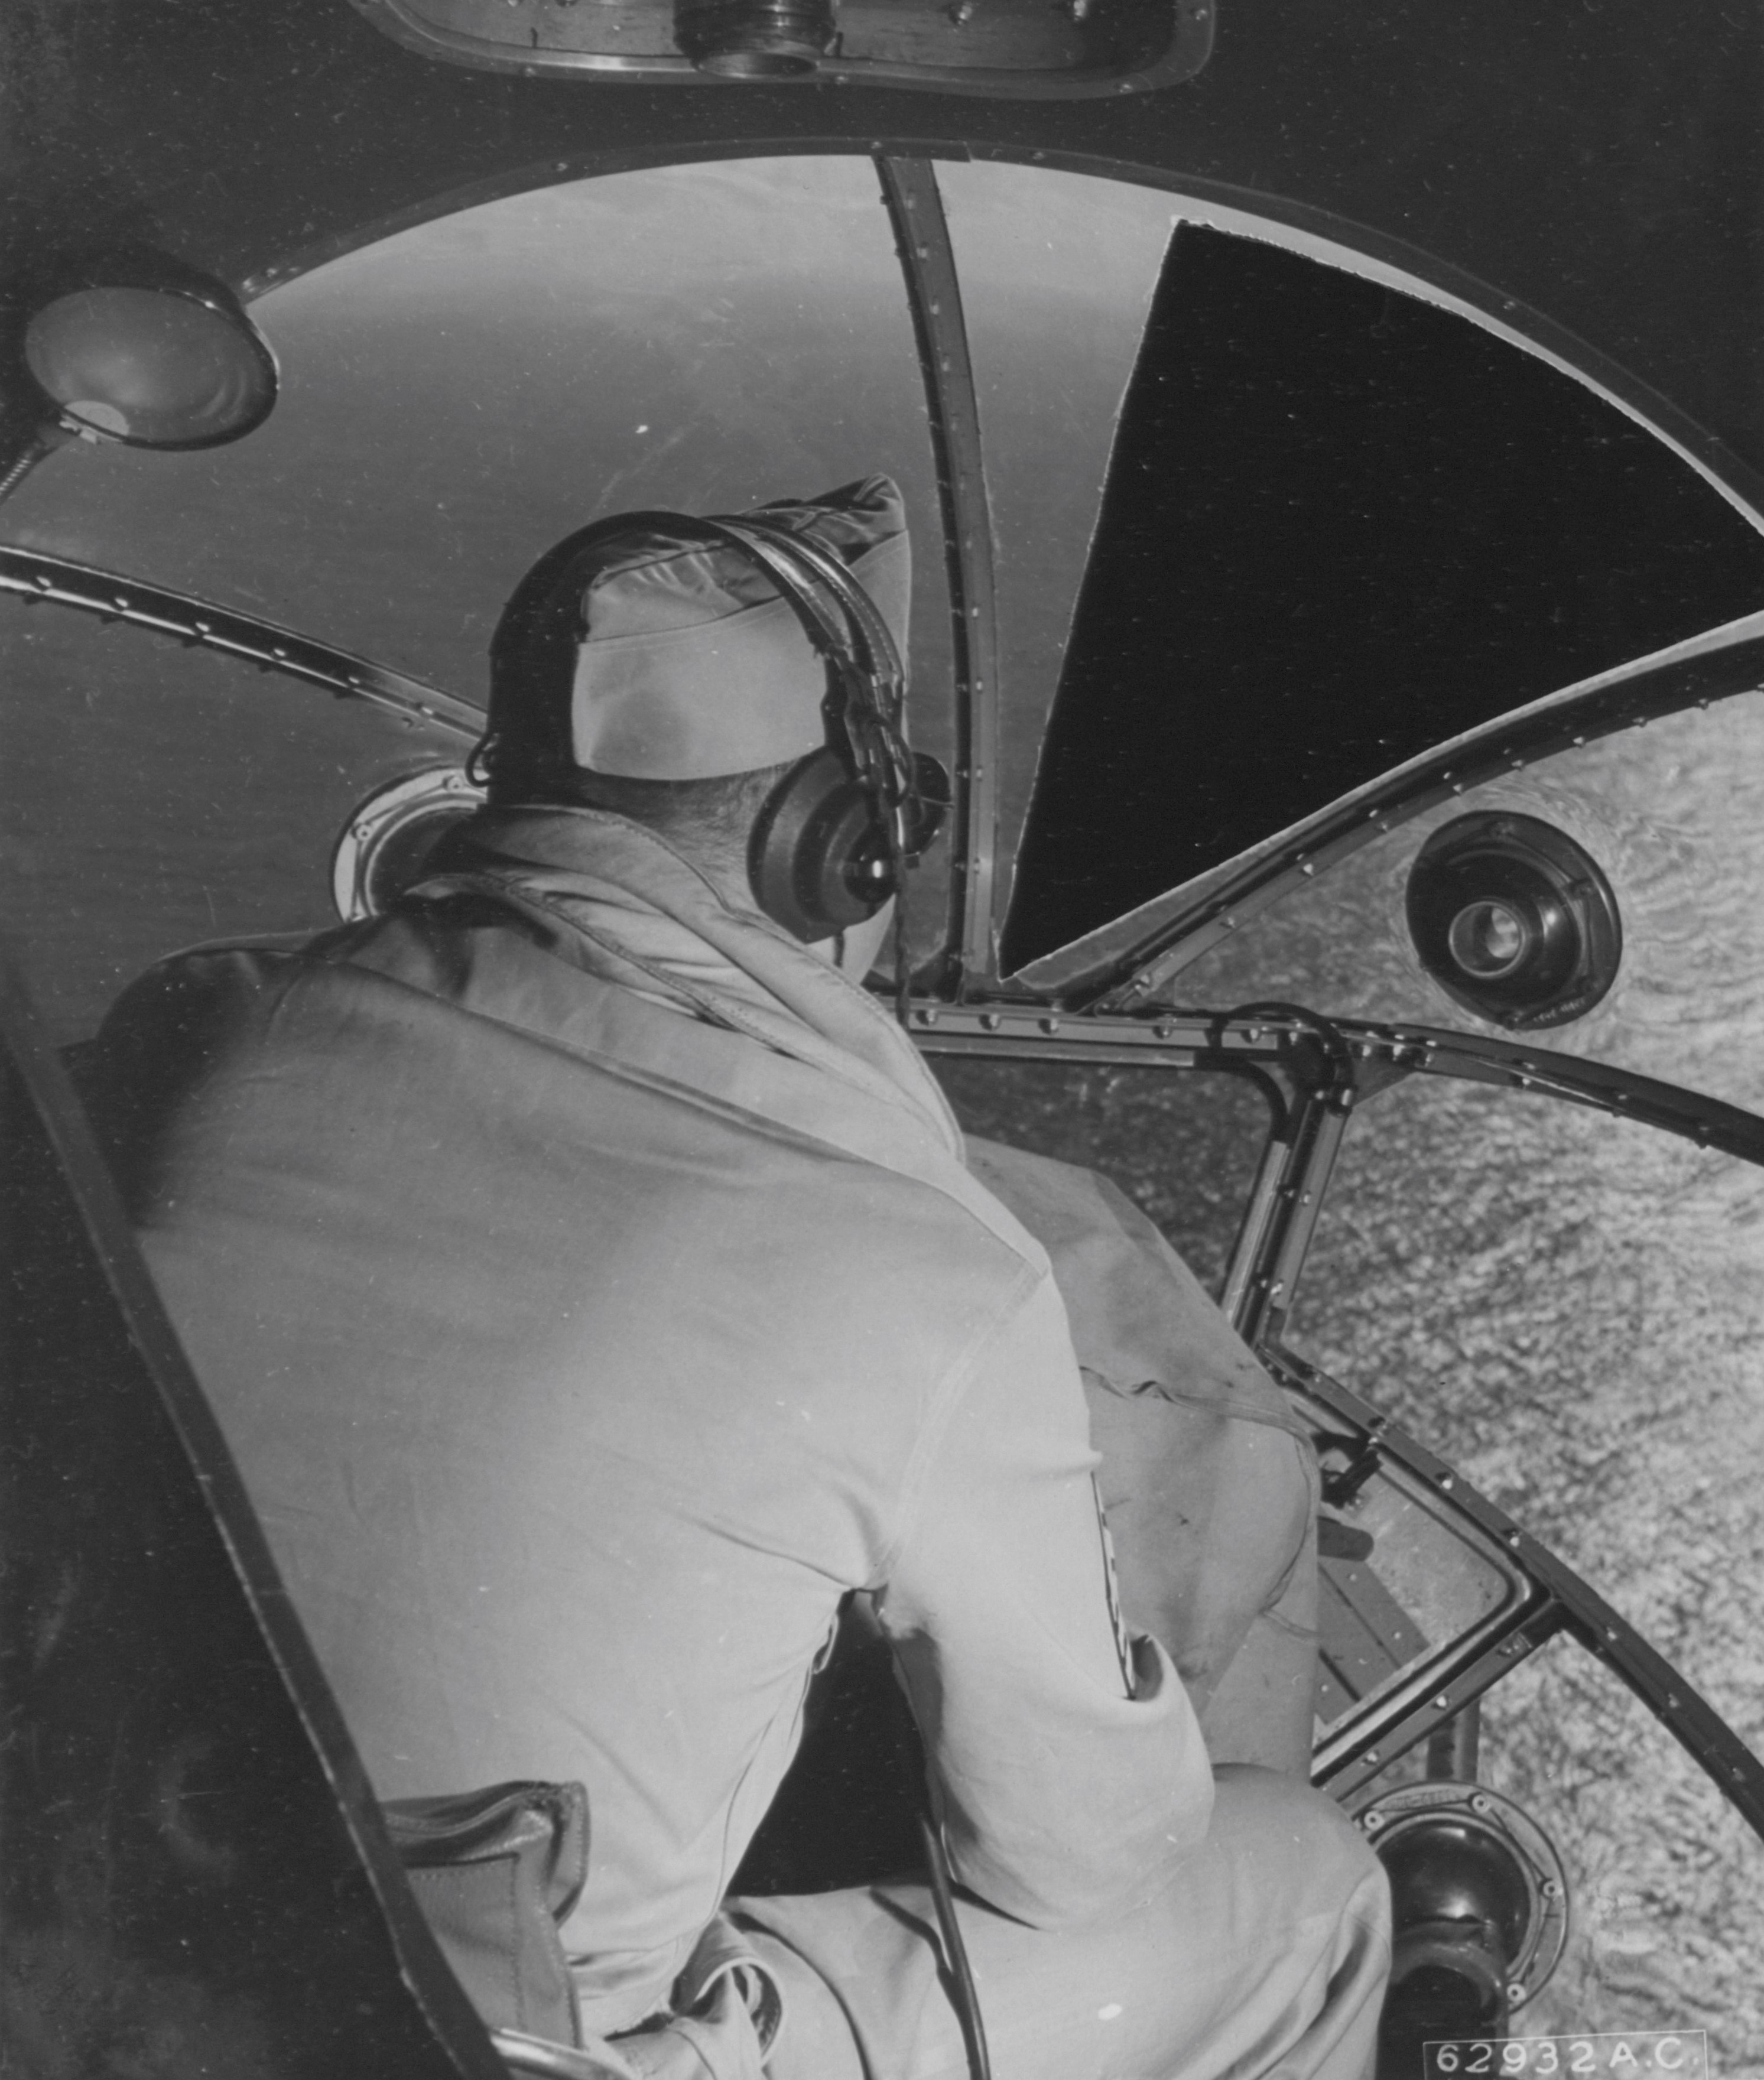 B-17 bomberdier at his station